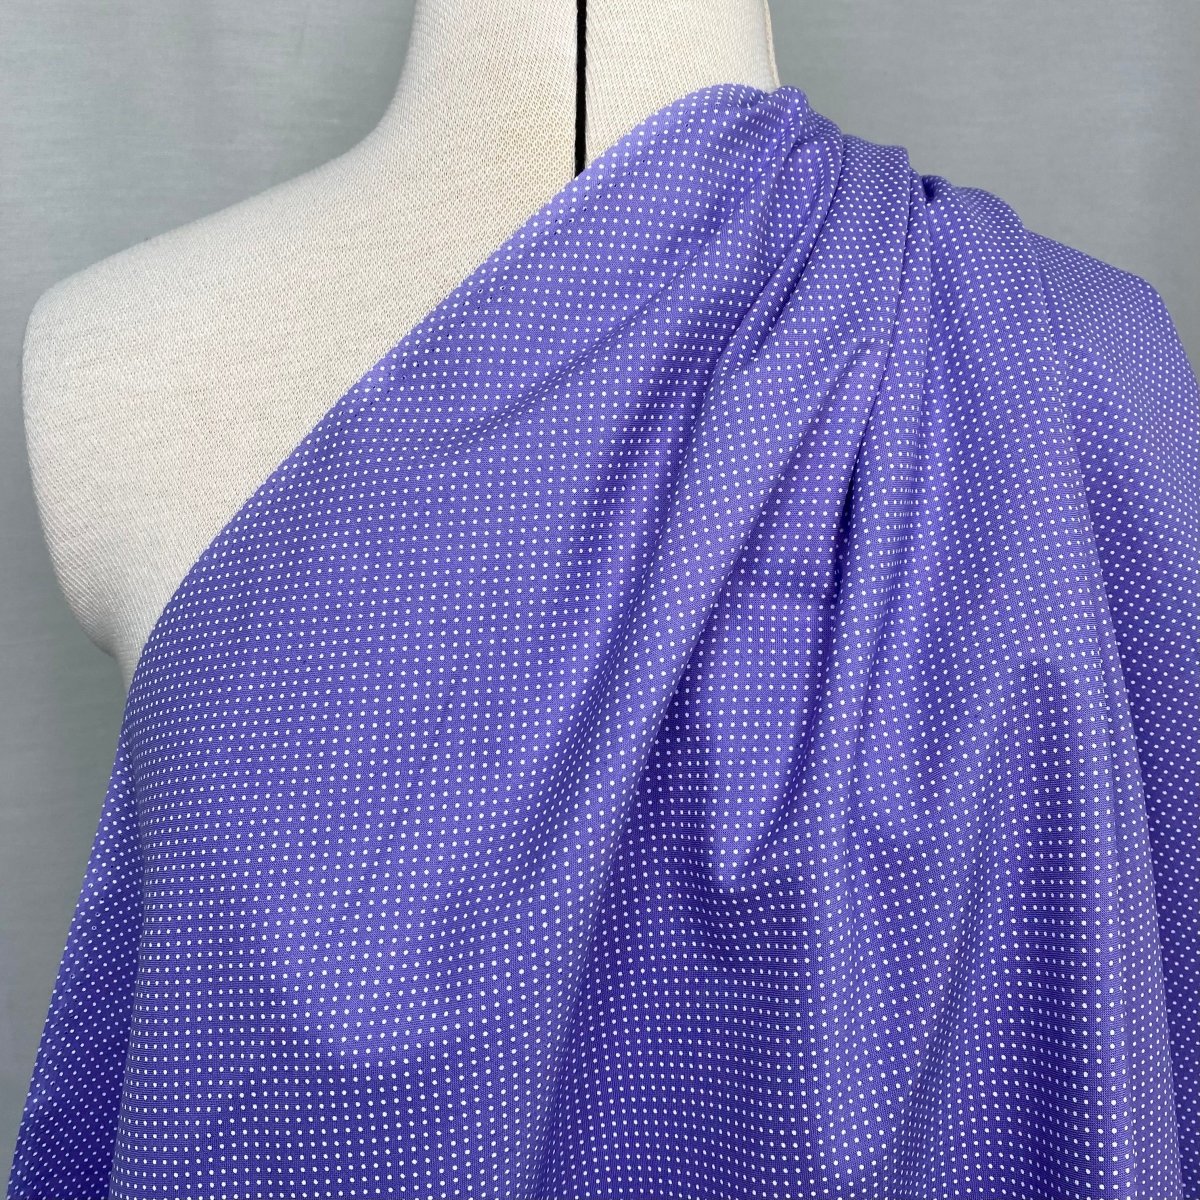 Sew Easy - Micro Dots - Light Purple - Sewing Gem